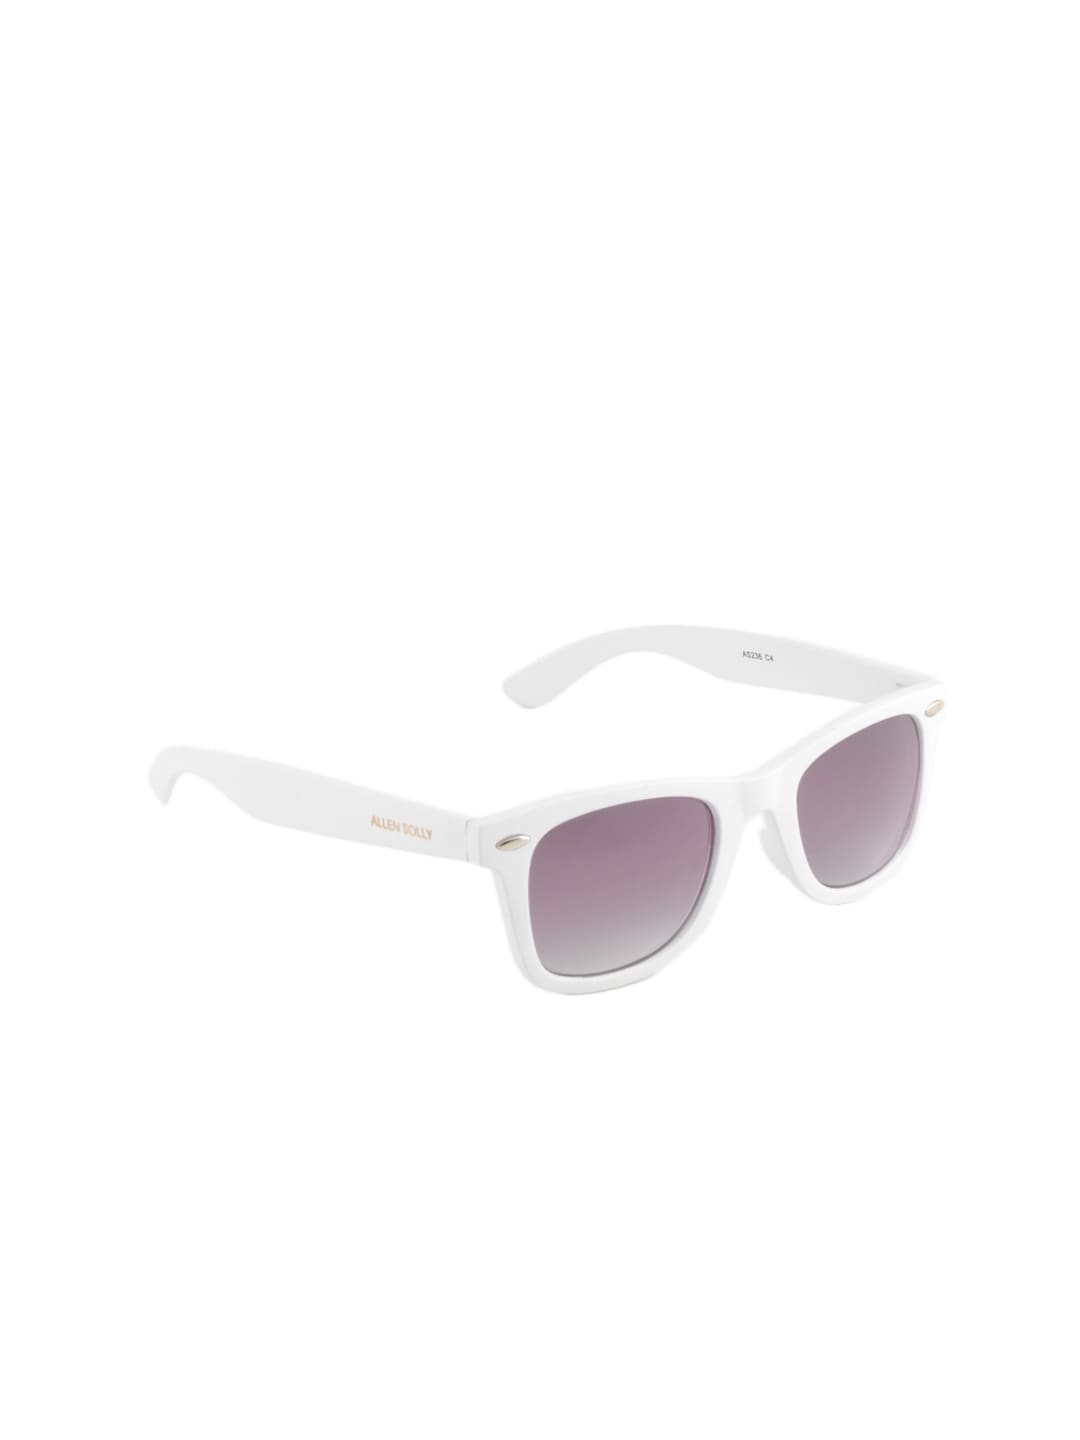 Allen Solly Unisex Sunglasses AS236-C4